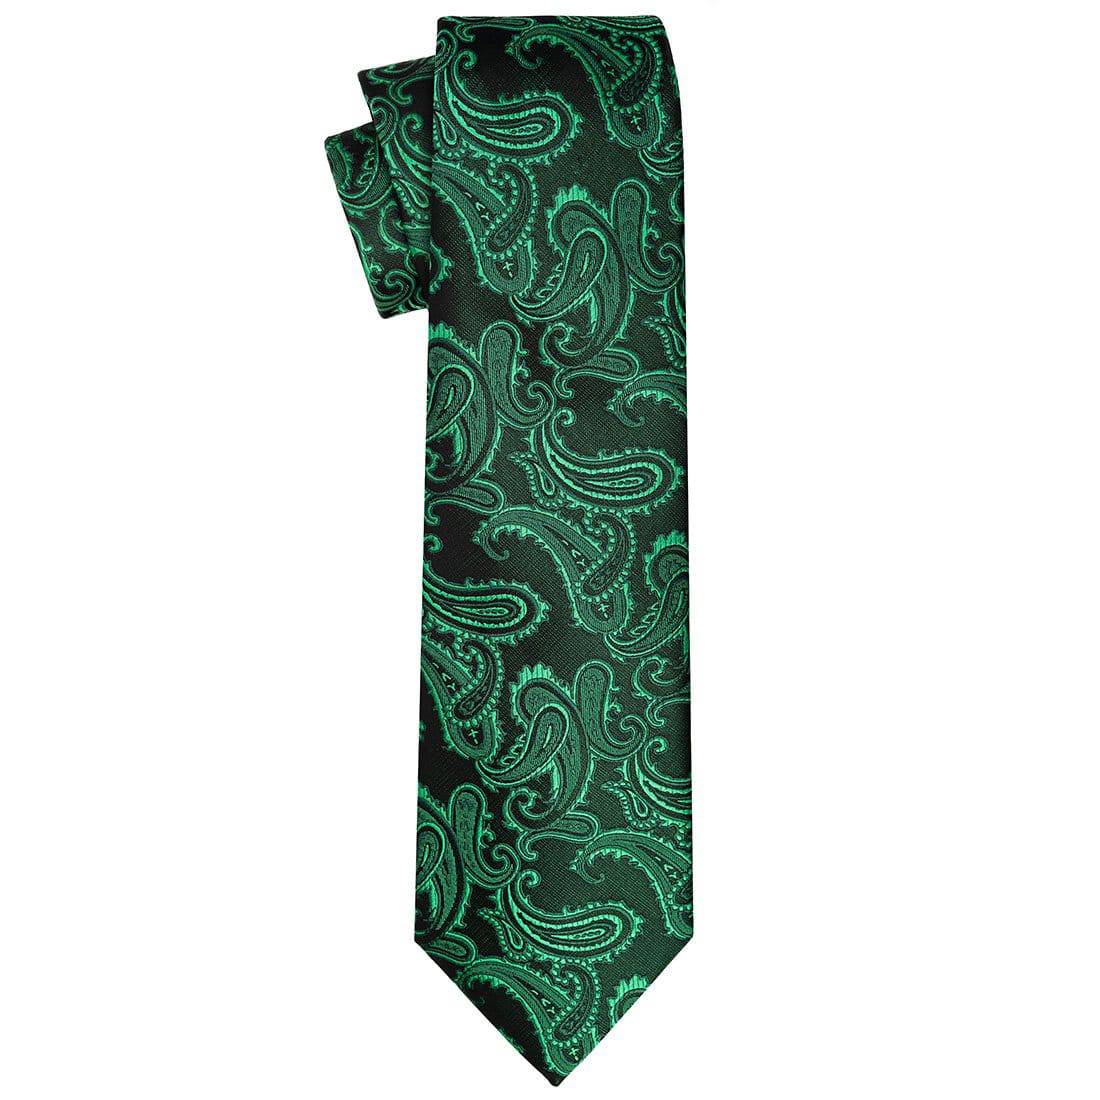 Seafoam Green on Black Paisley Tie - Tie, bowtie, pocket square  | Kissties